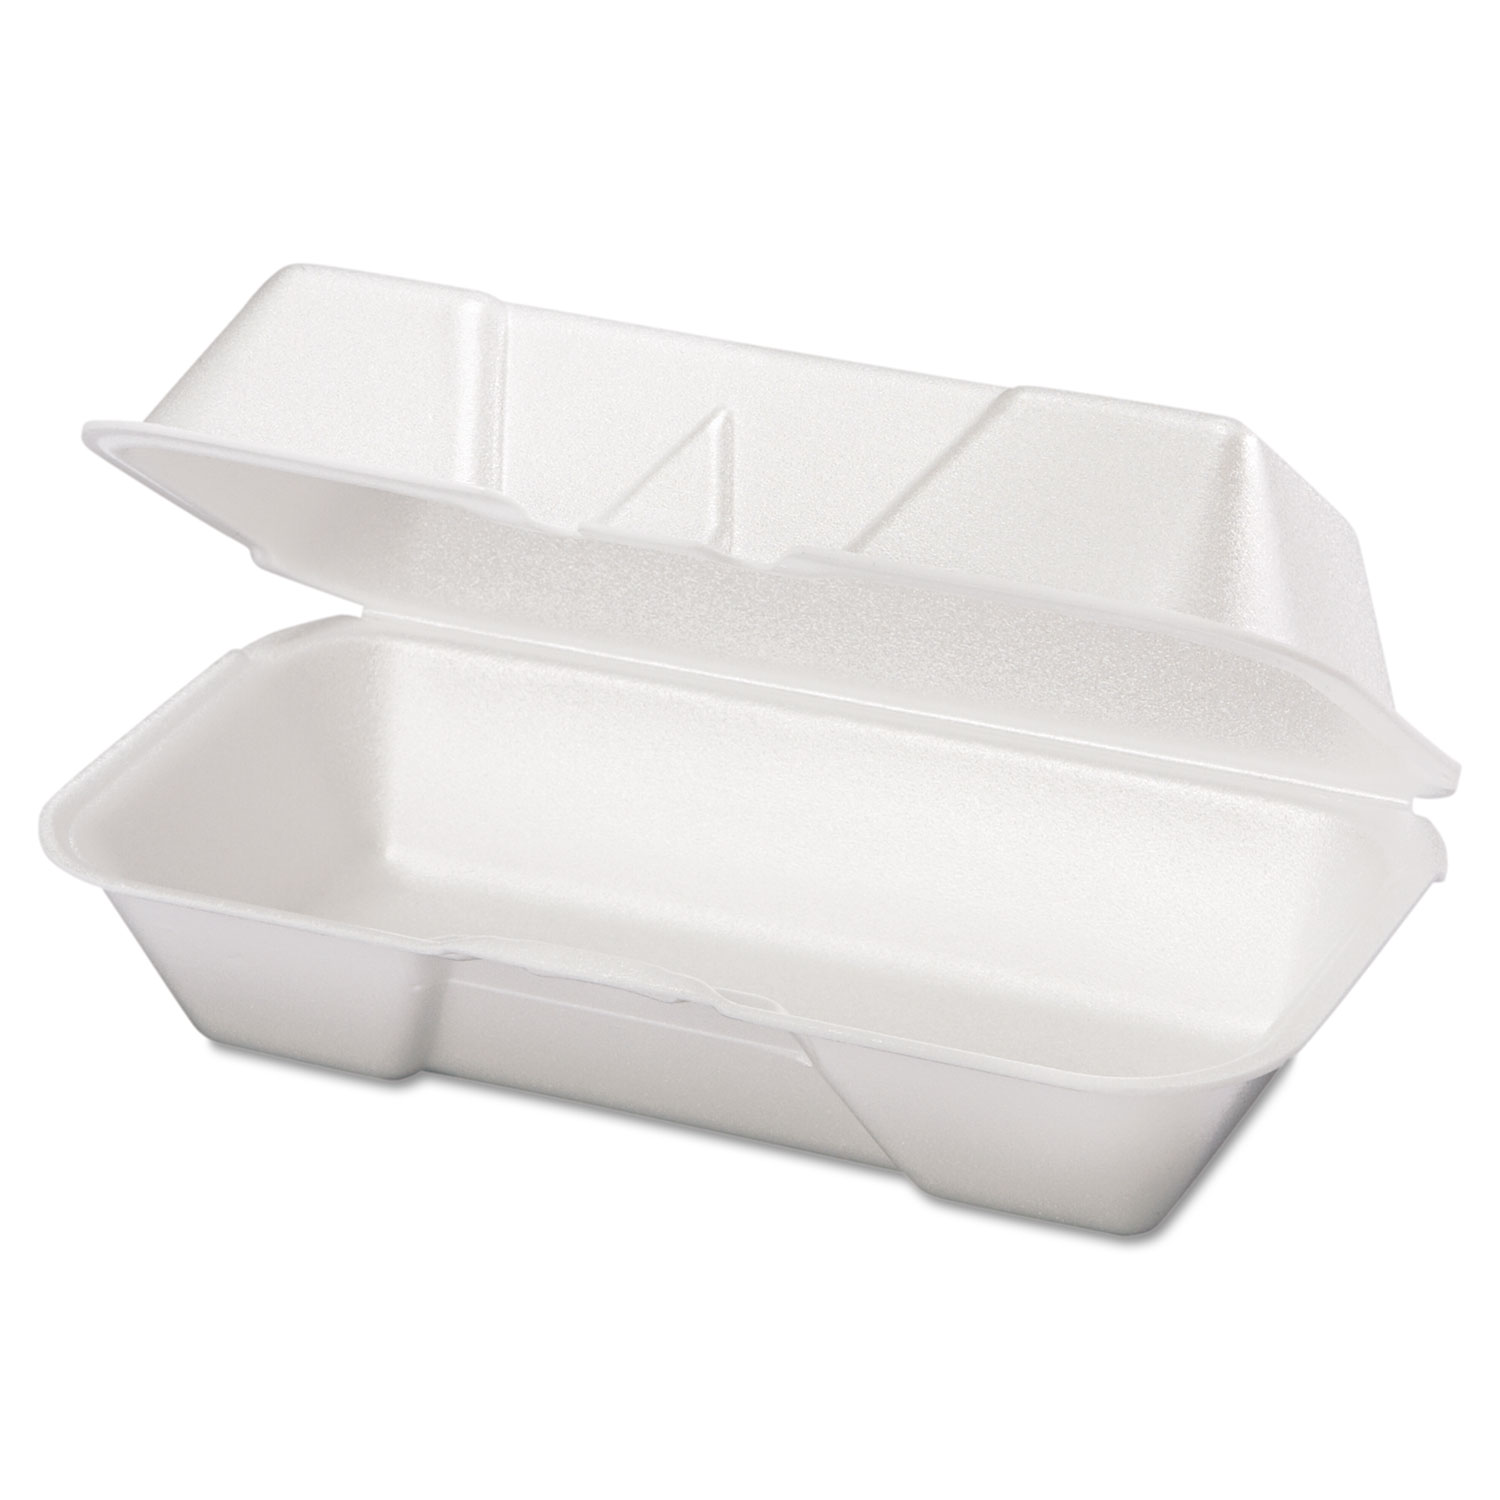  Genpak 21600--- Foam Hoagie Container, 8 7/16 x 4 3/16 x 3 1/16, White, 125/Bag, 4 Bags/Carton (GNP21600) 